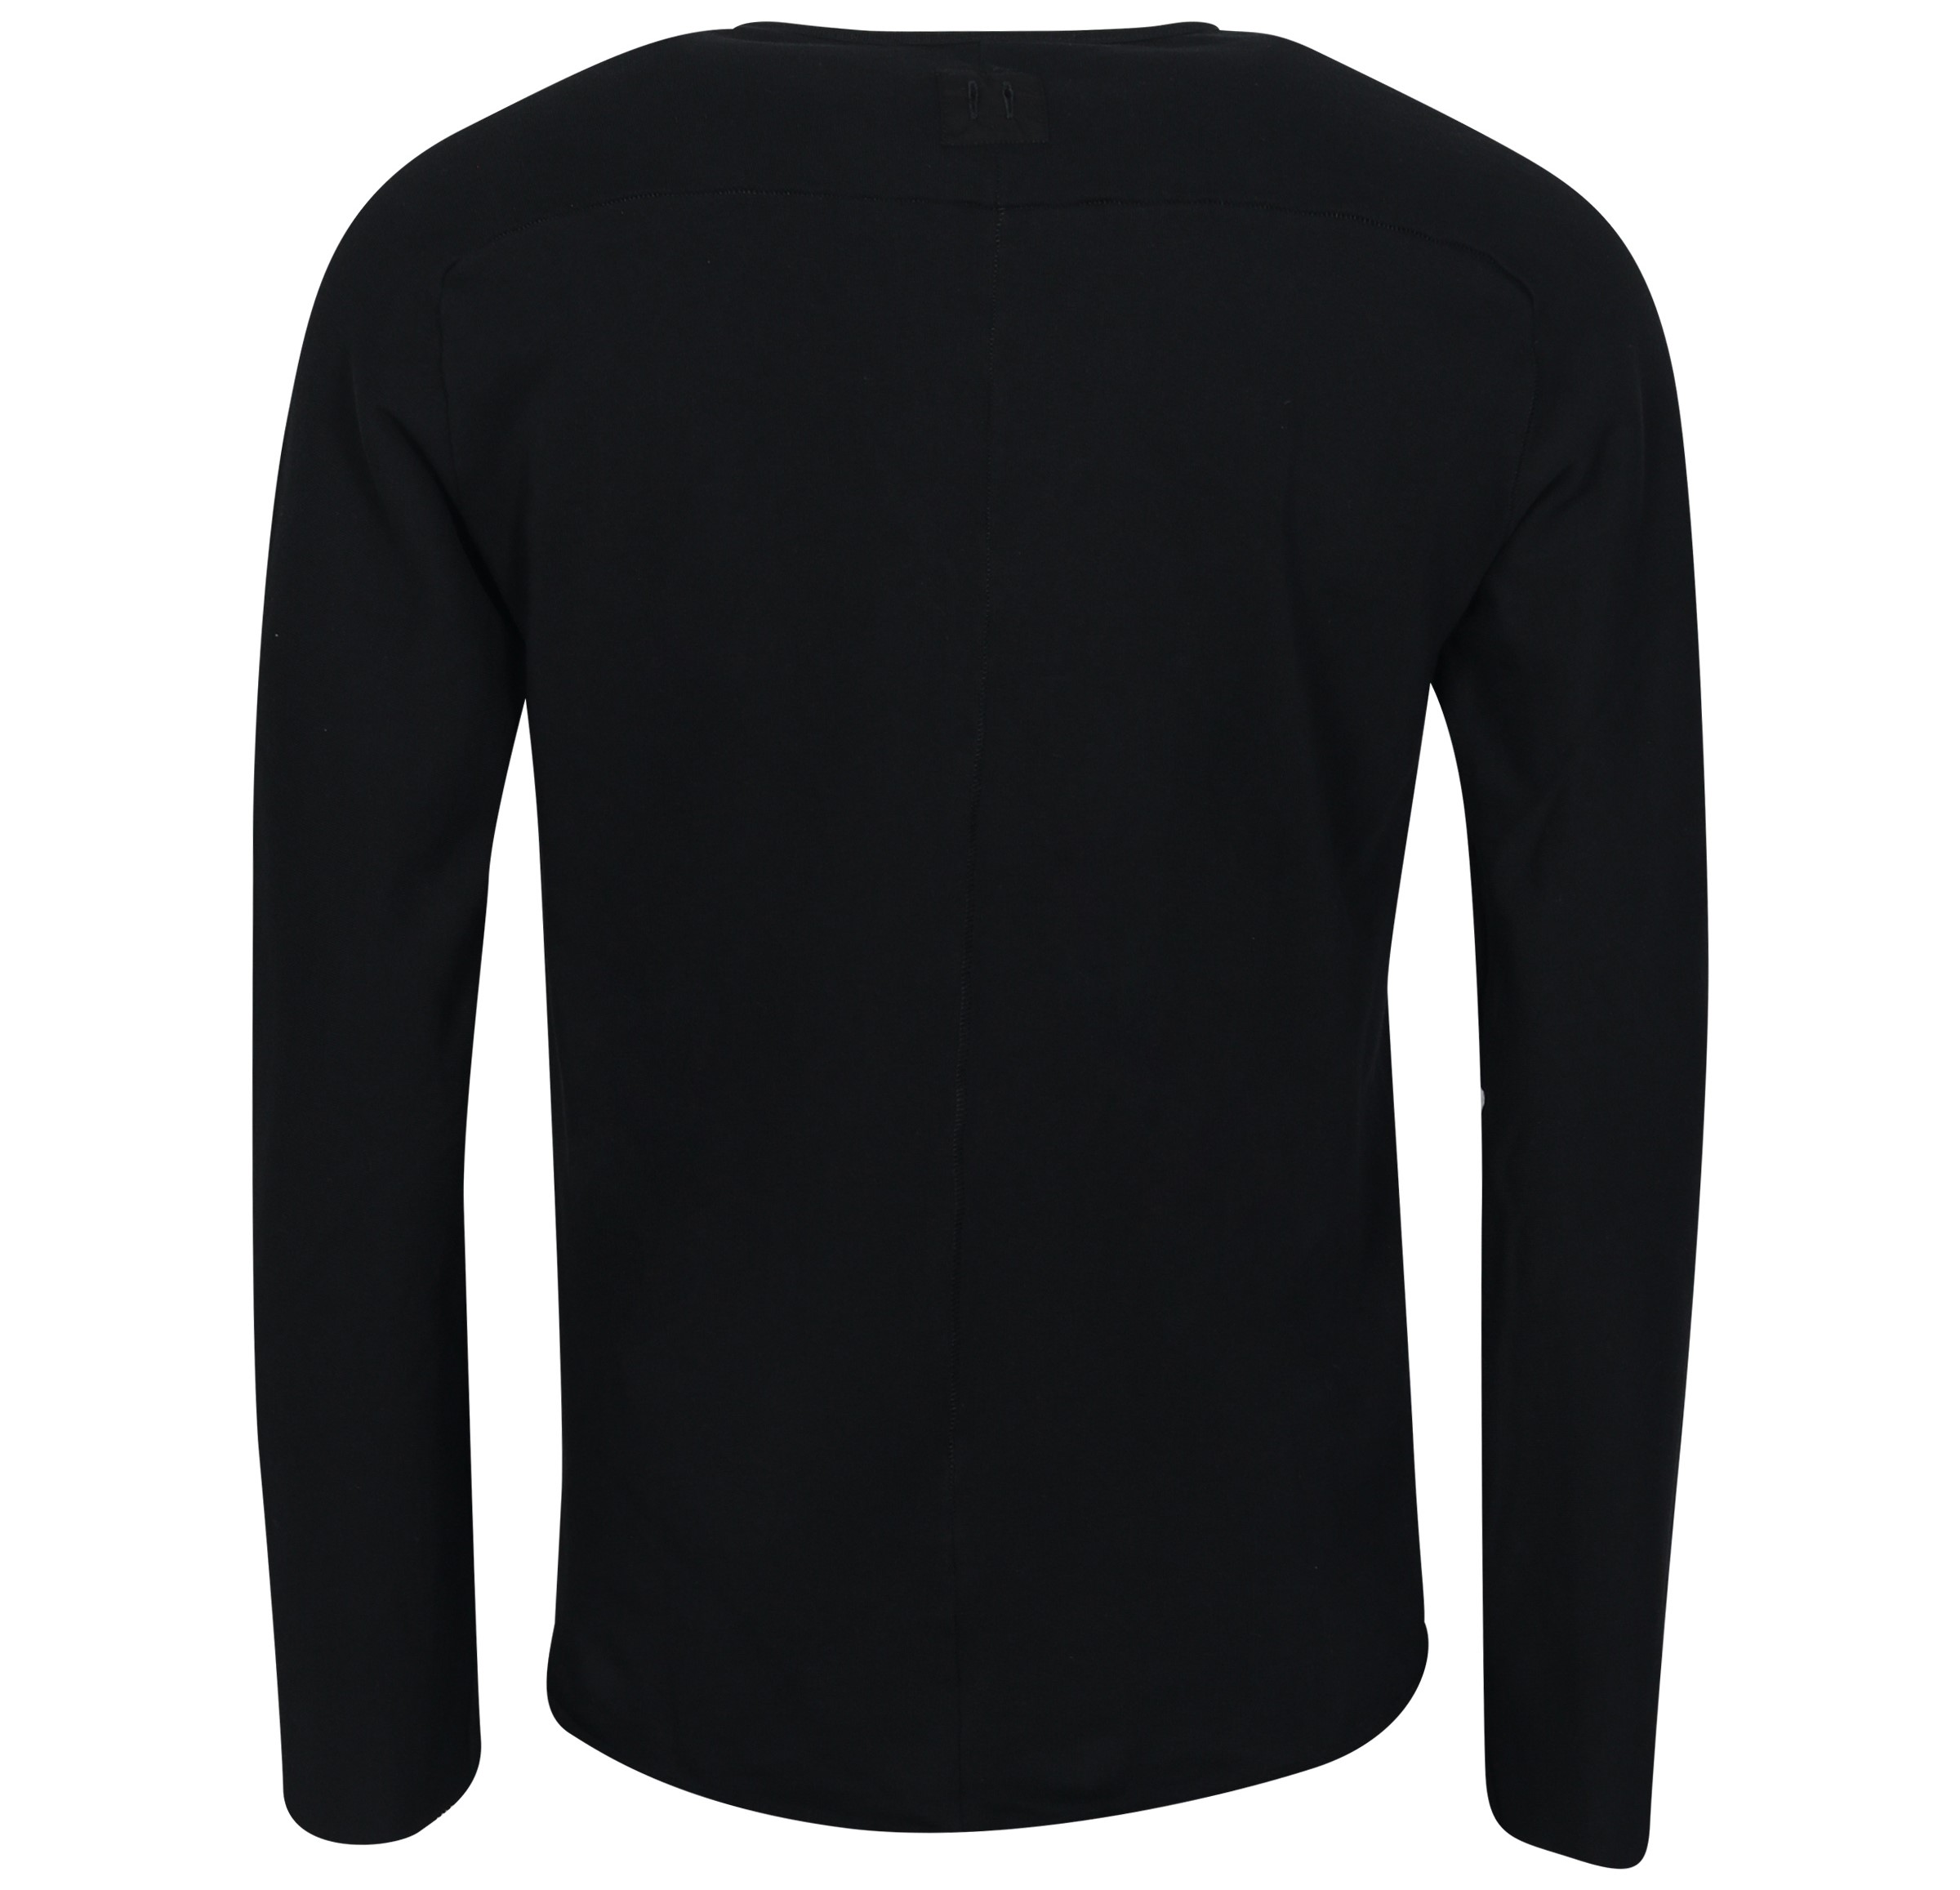 HANNES ROETHER Soft Cotton Sweatshirt in Black S